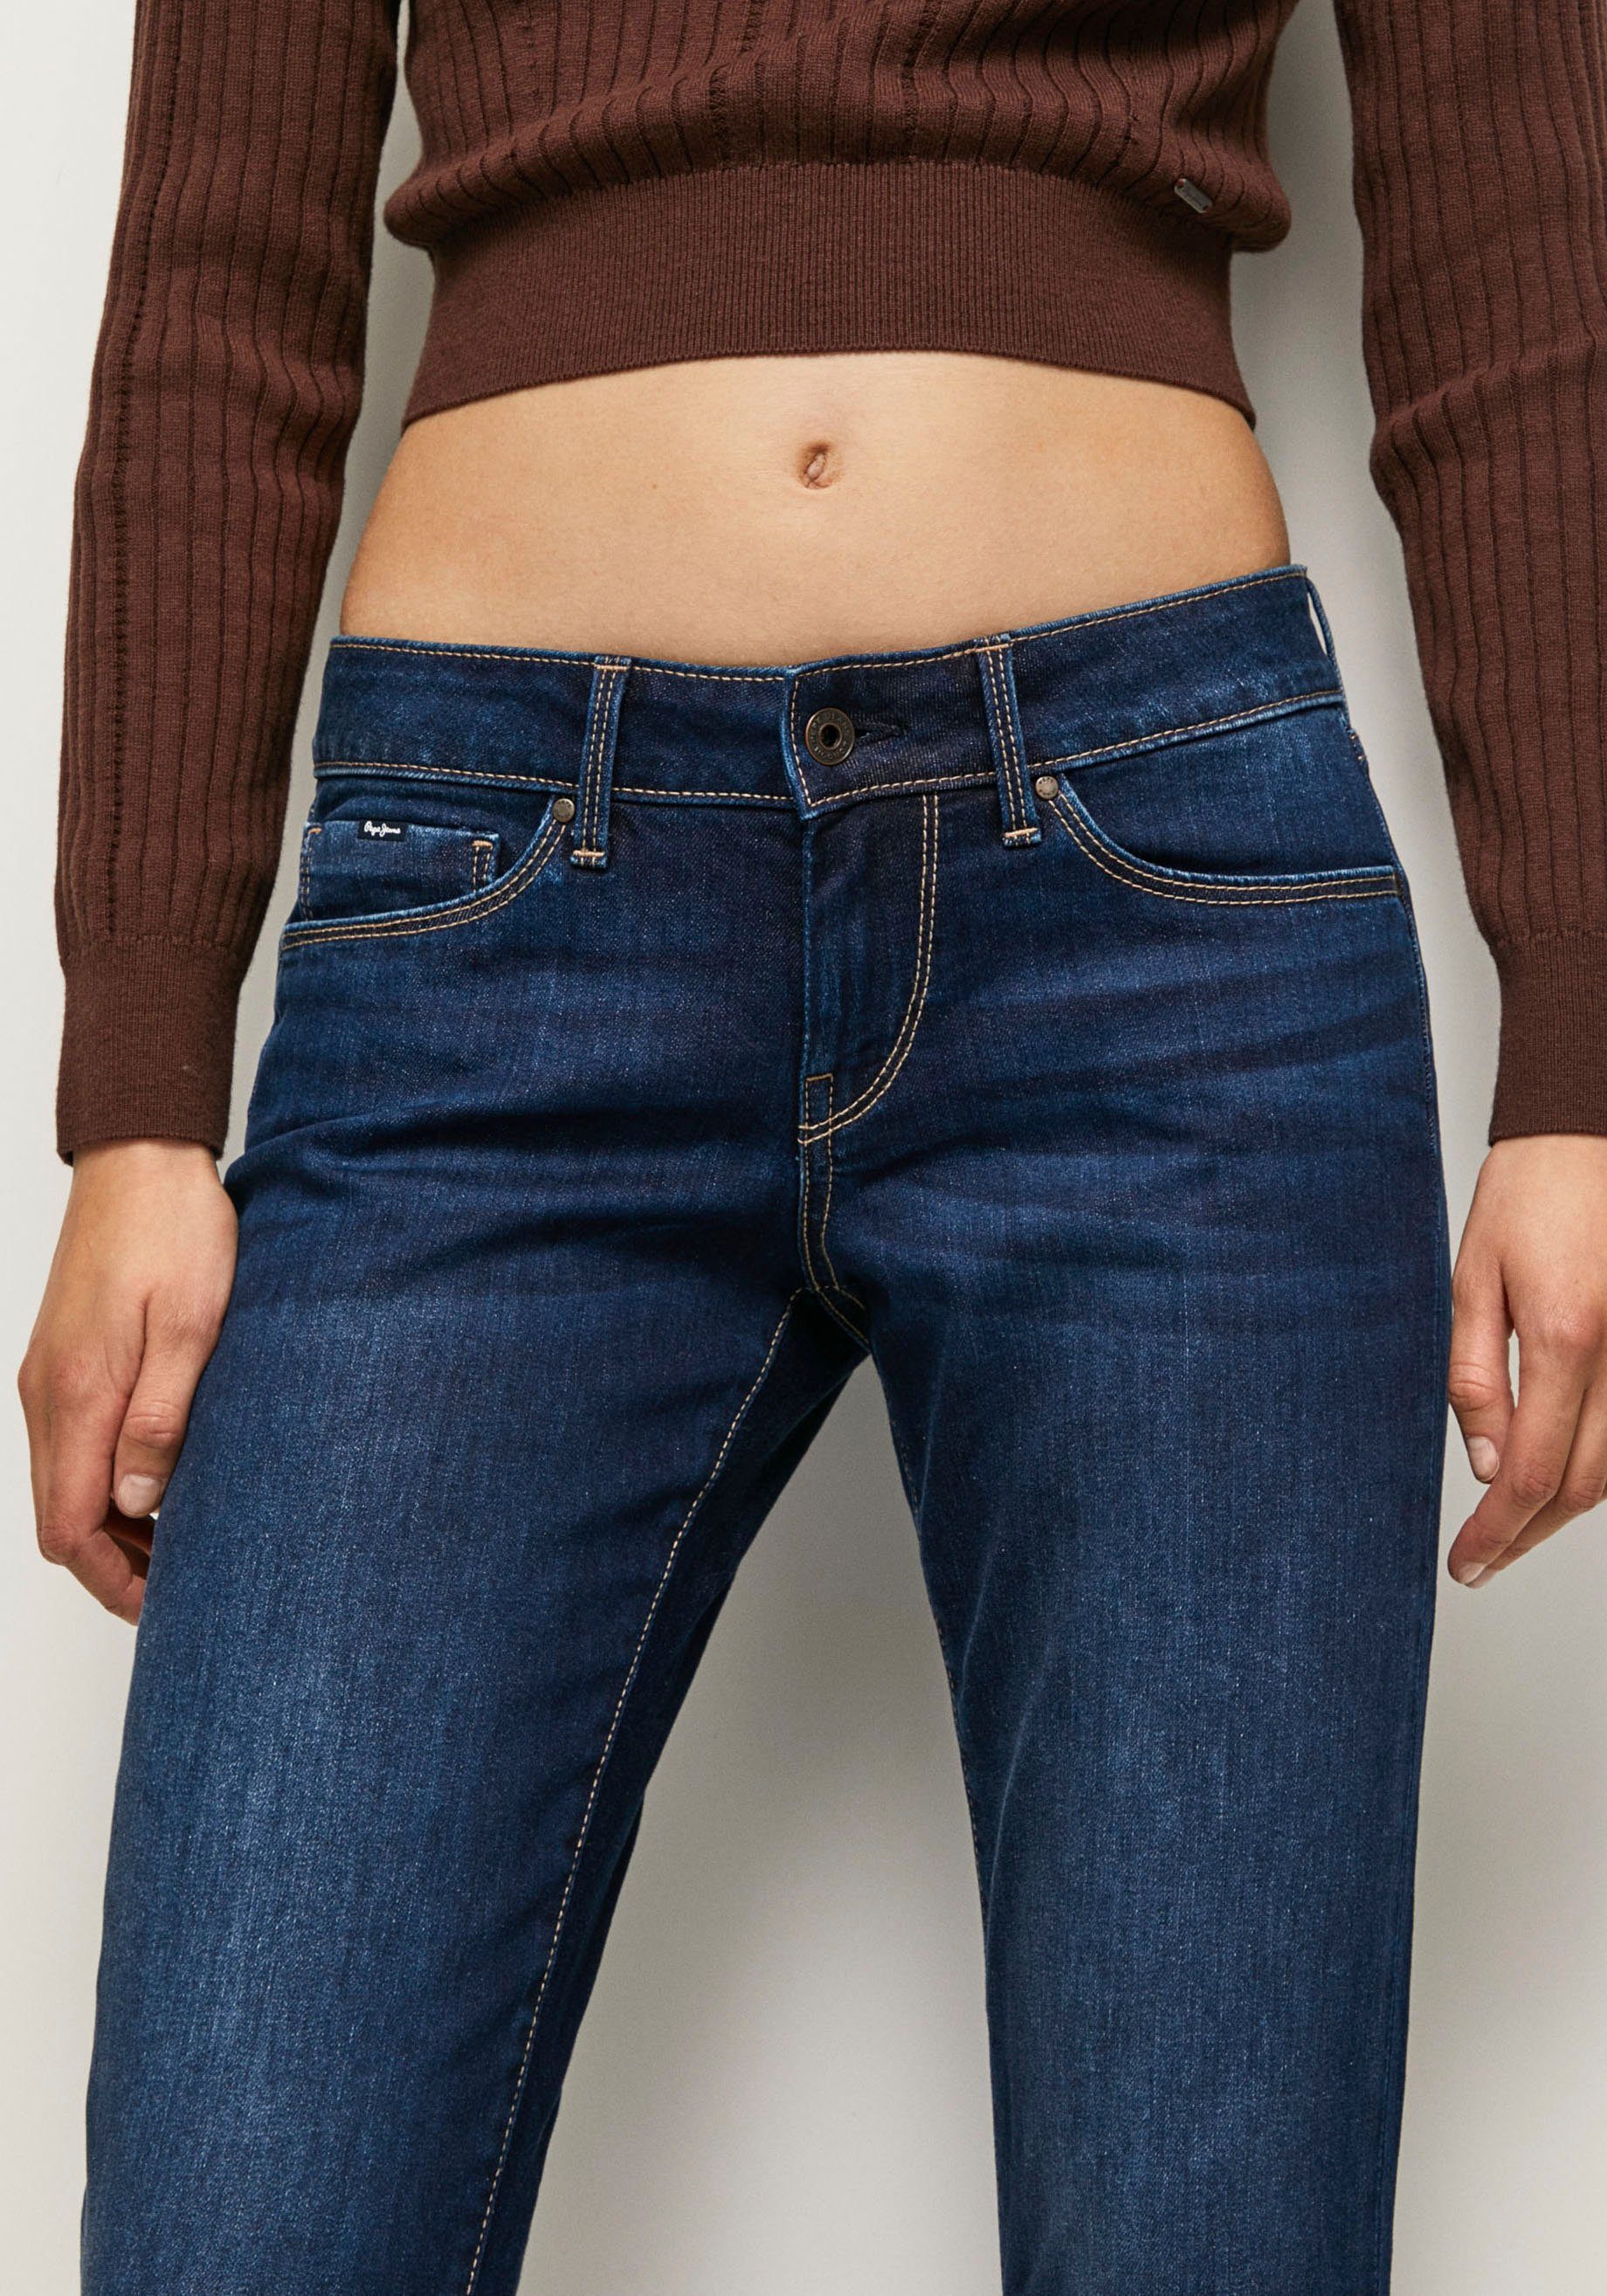 1-Knopf Pepe Jeans und Bund mit im DARK Skinny-fit-Jeans Stretch-Anteil USED 5-Pocket-Stil SOHO